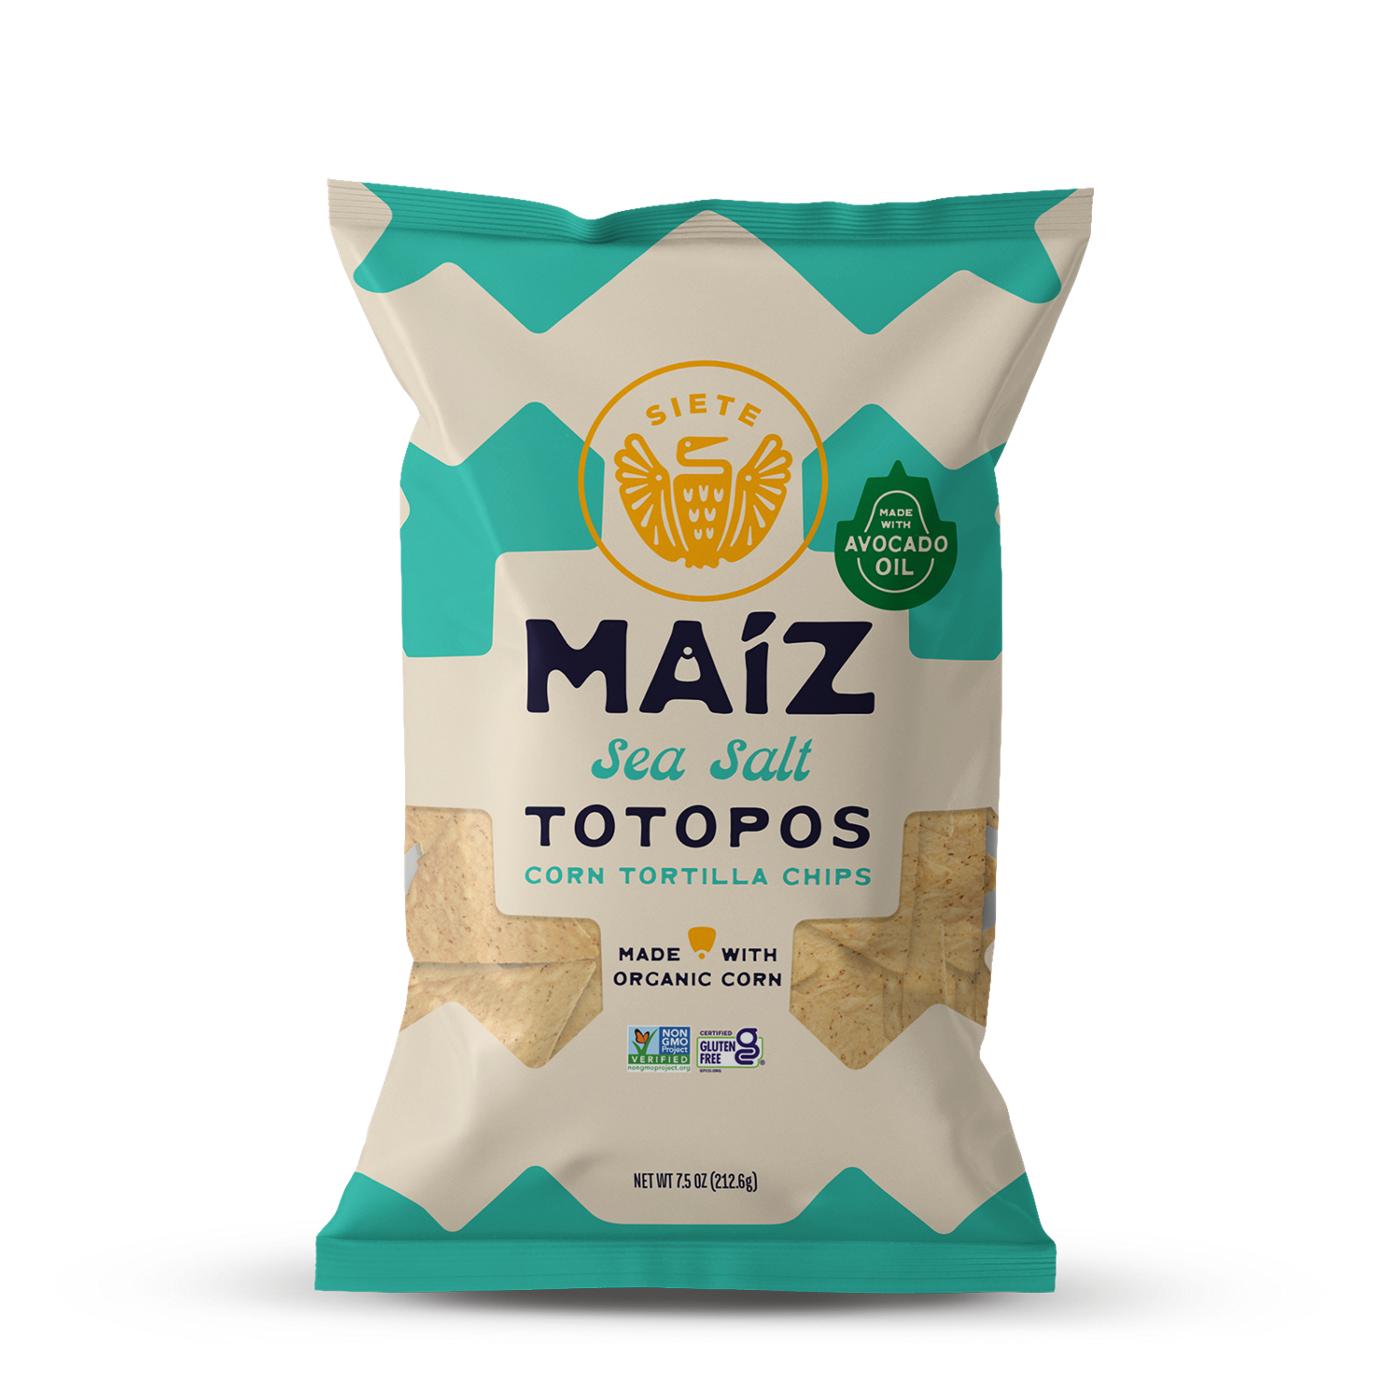 Siete Corn Tortilla Chips Maiz Totopos - Sea Salt; image 1 of 2